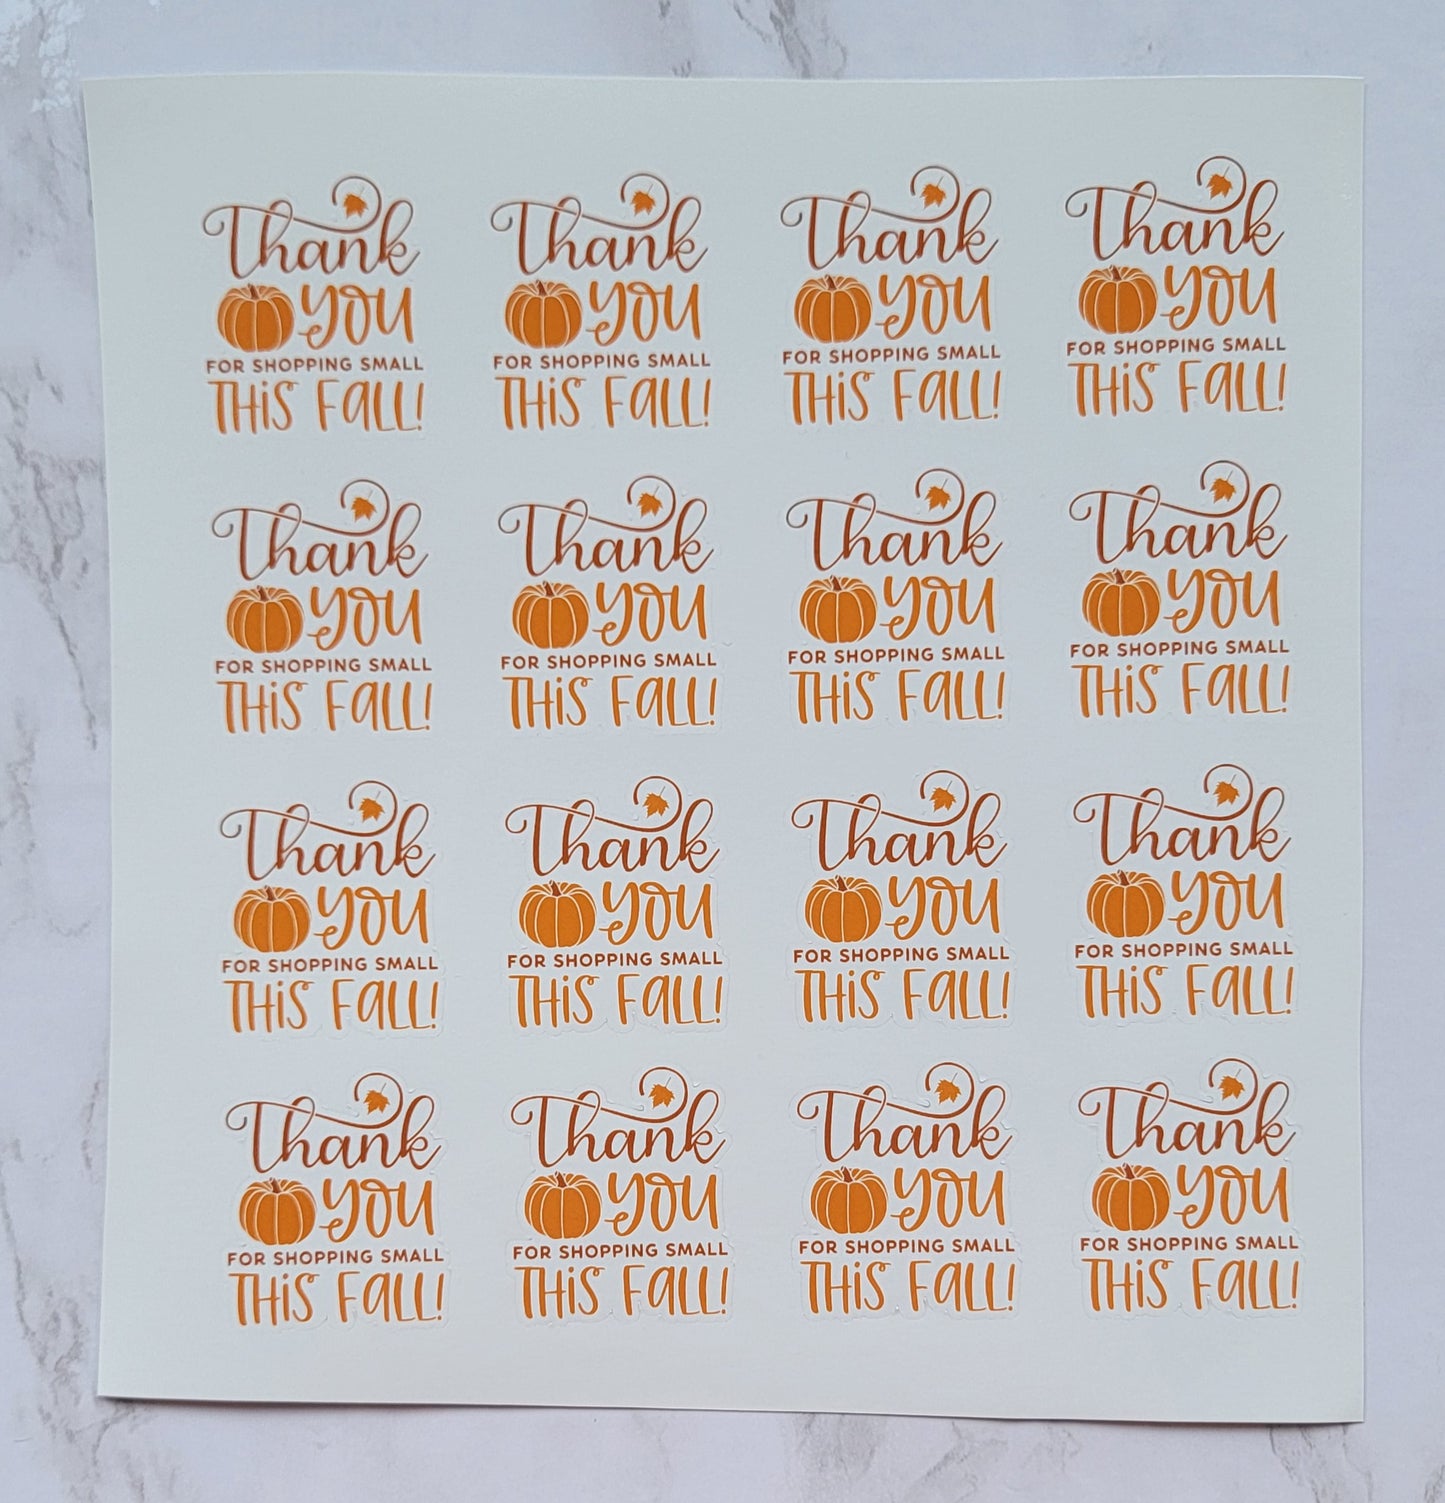 Autumn/Pumpkin Theme - "Thank You For Shopping Small This Fall" - Dark/Light Orange w/ White Background - Waterproof Sticker Sheet